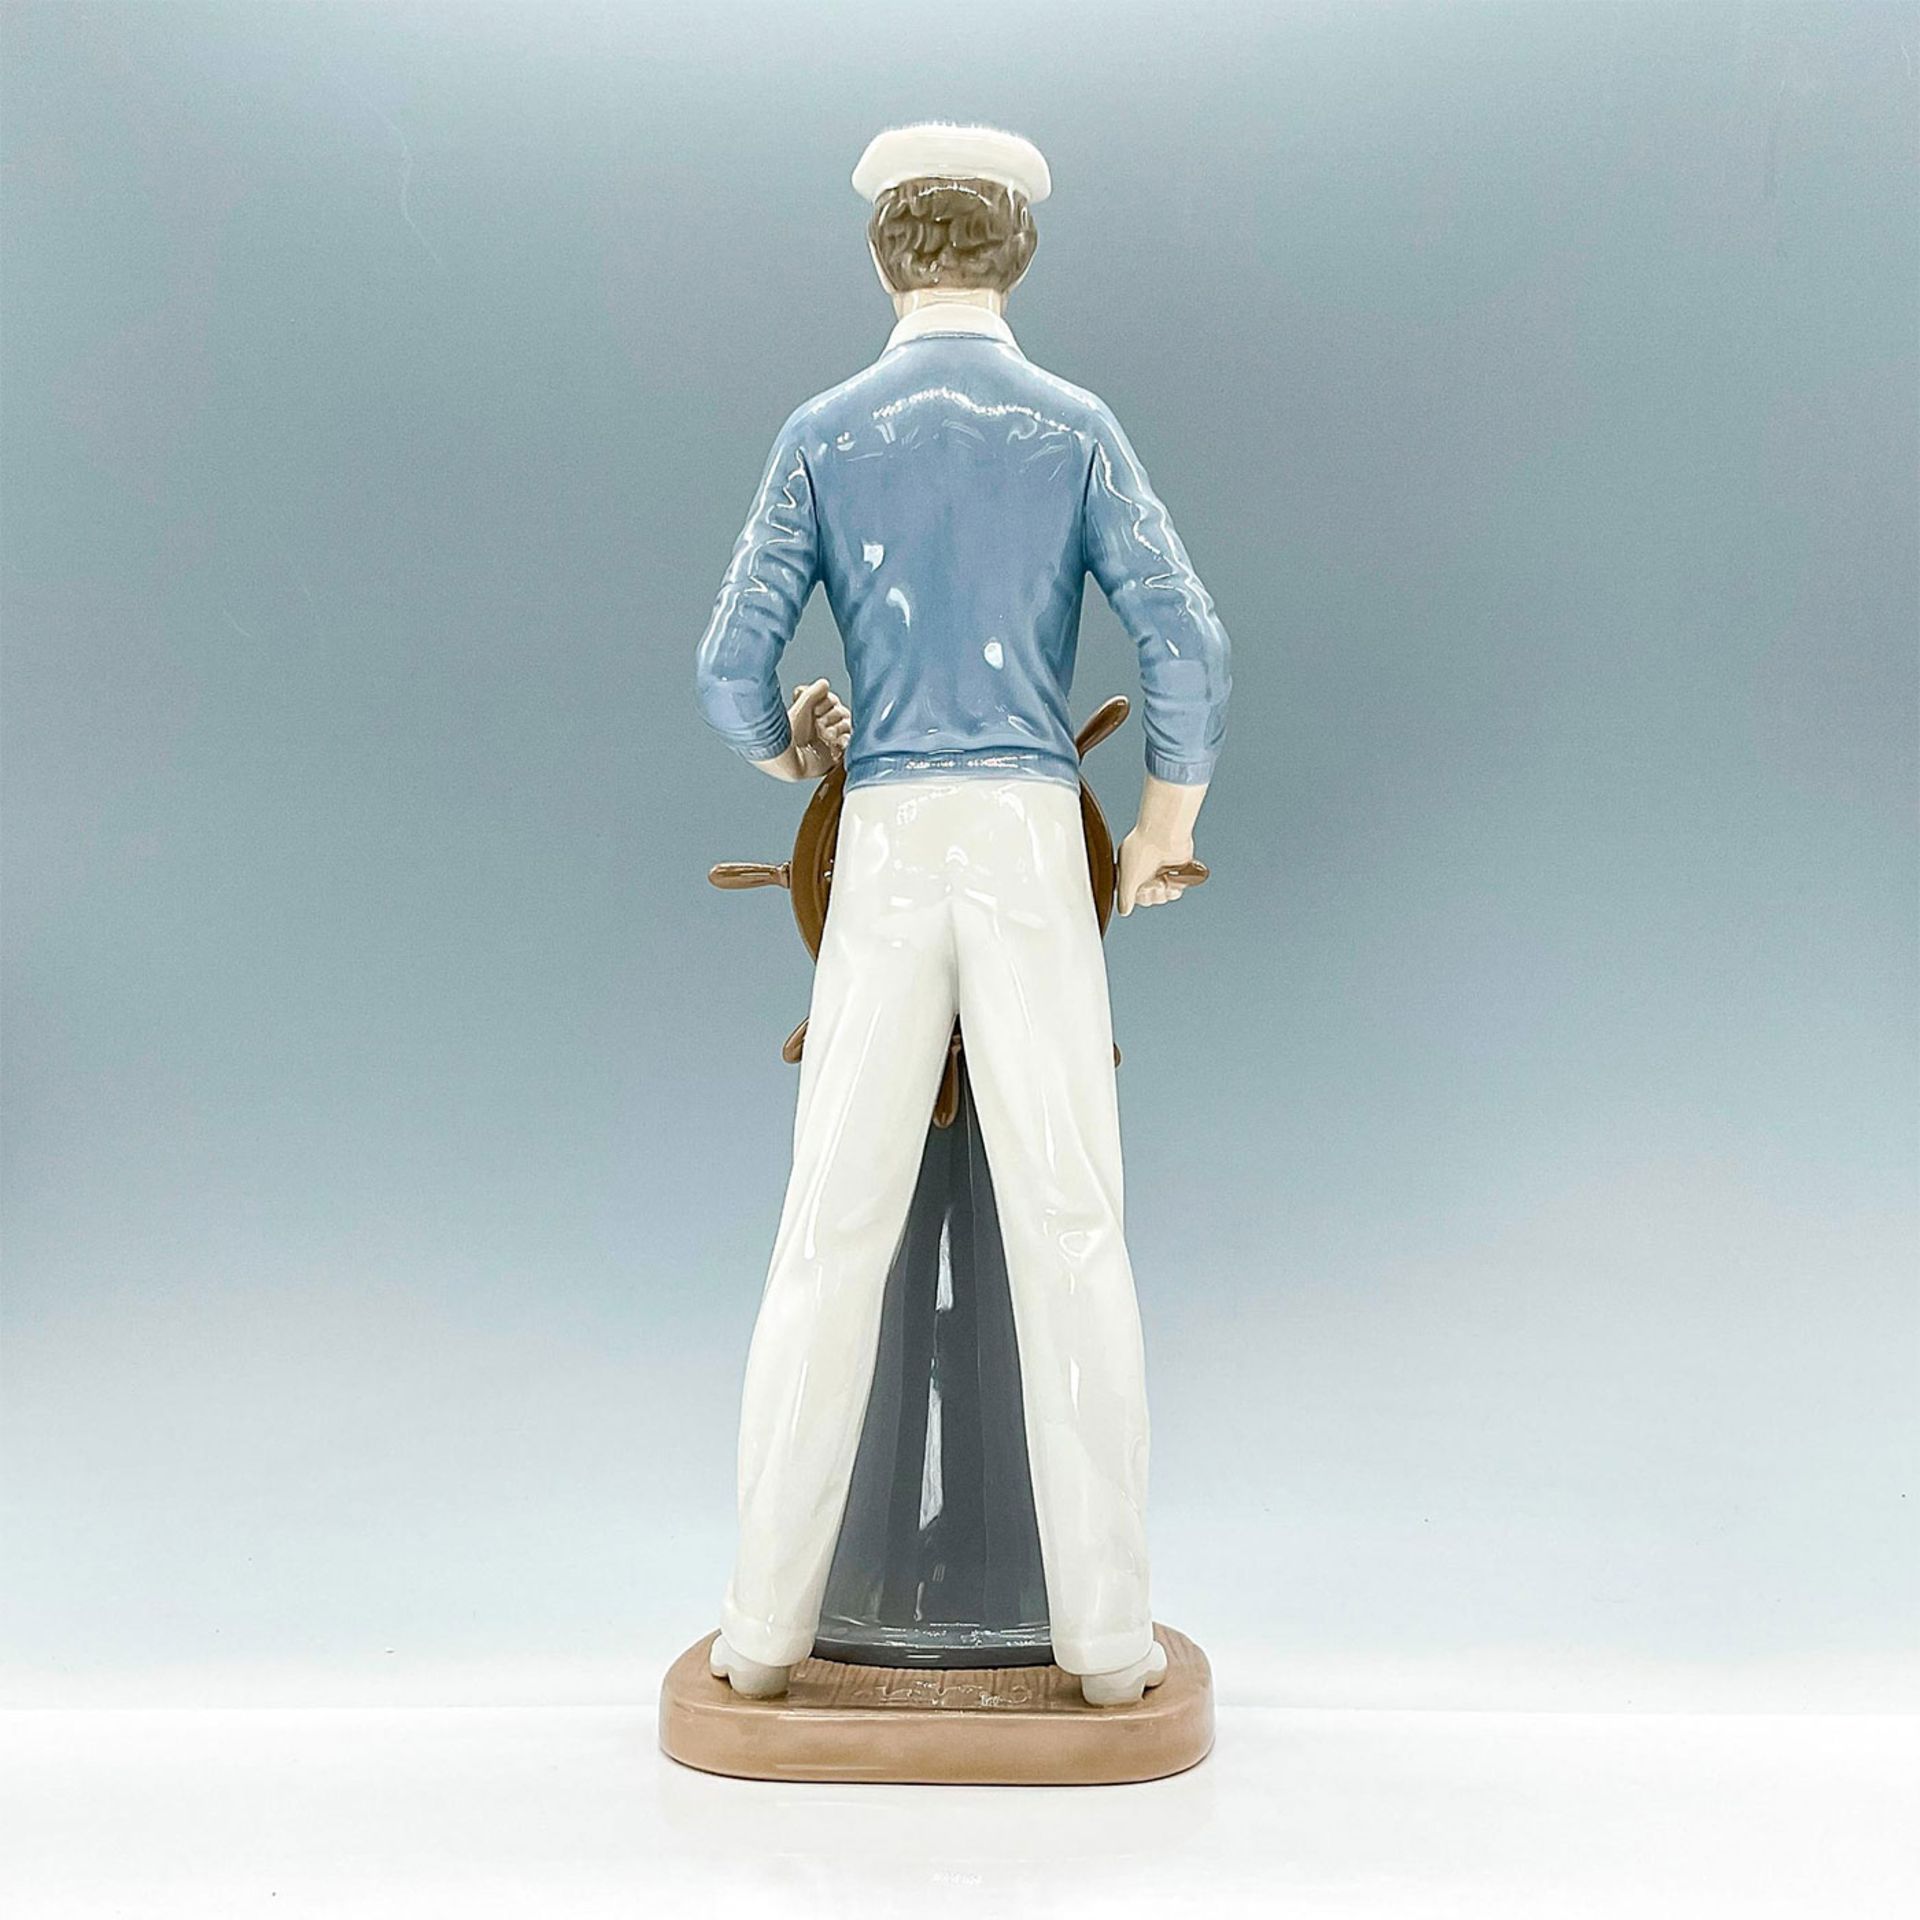 Yachtsman 1005206 - Lladro Porcelain Figurine - Image 2 of 3